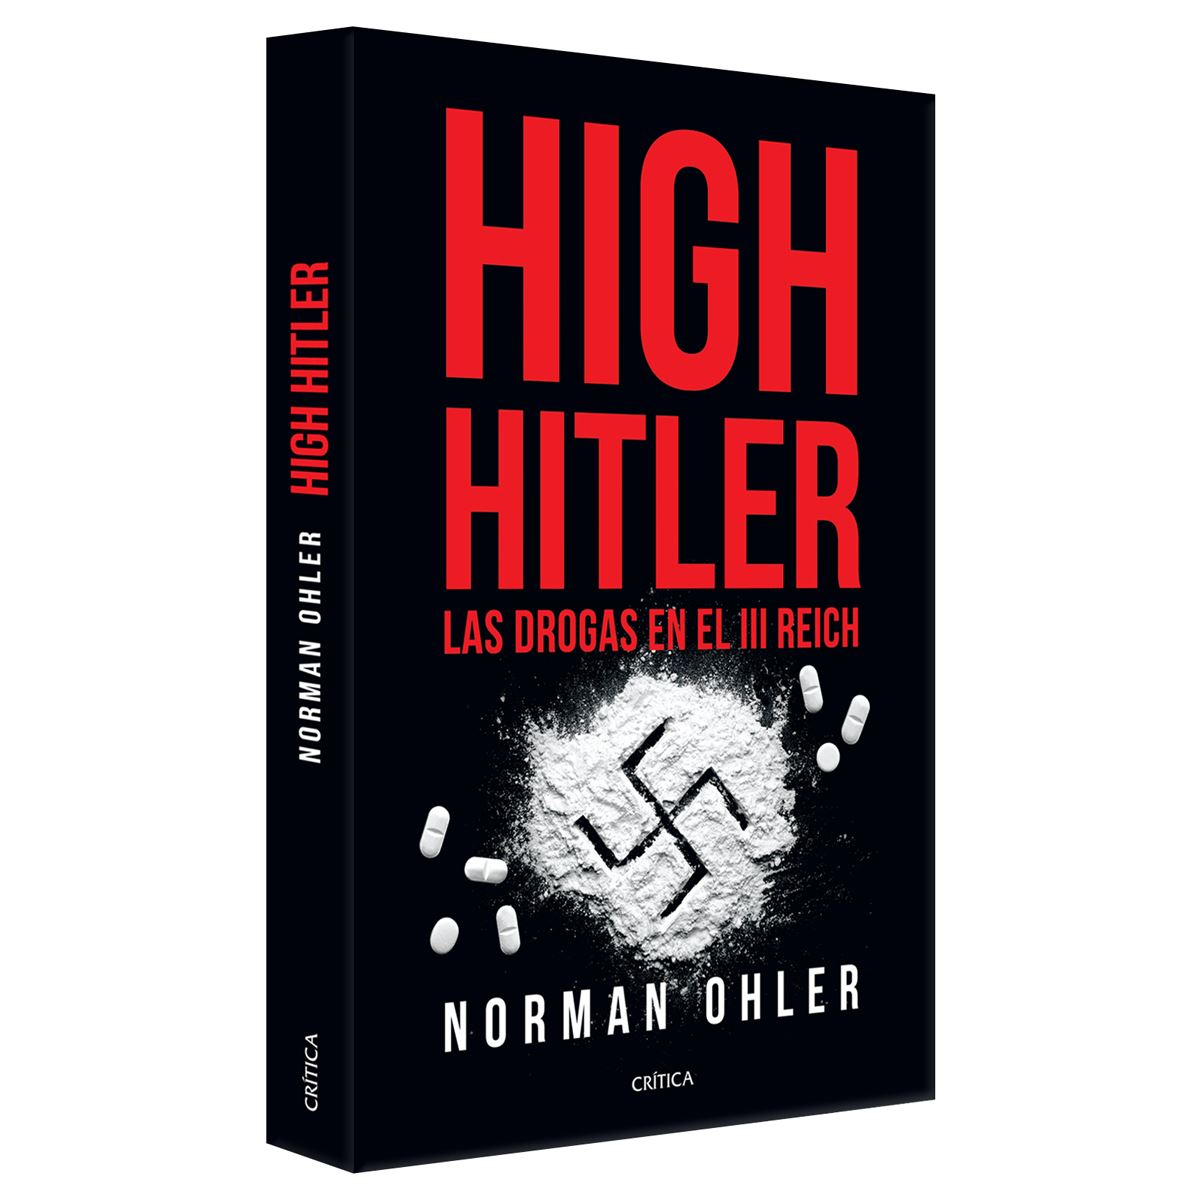 High Hitler